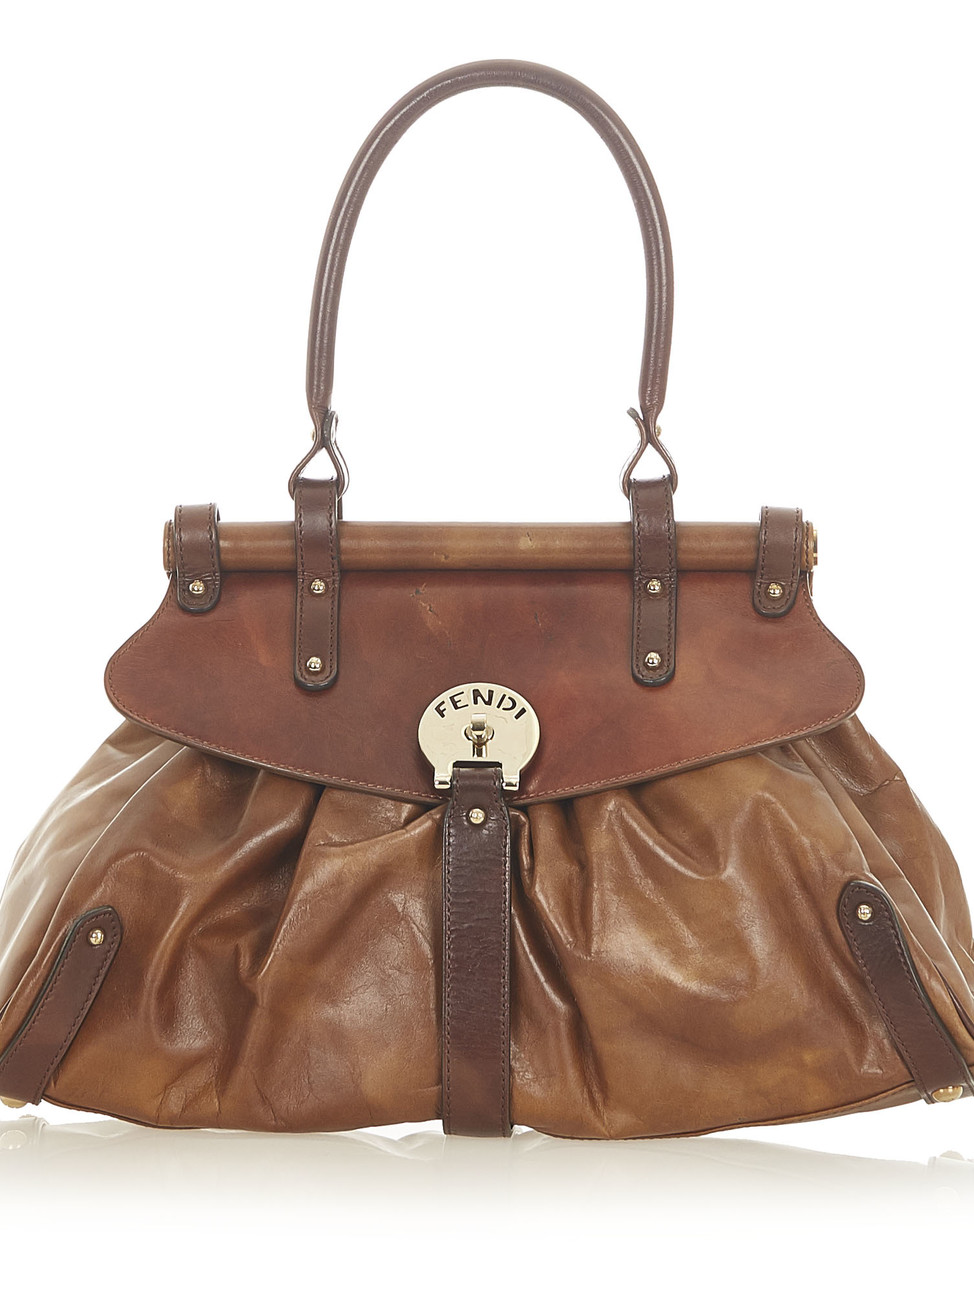 Shop Preowned and Vintage Designer Handbags and Accessories at Marmalade -  Marmalade